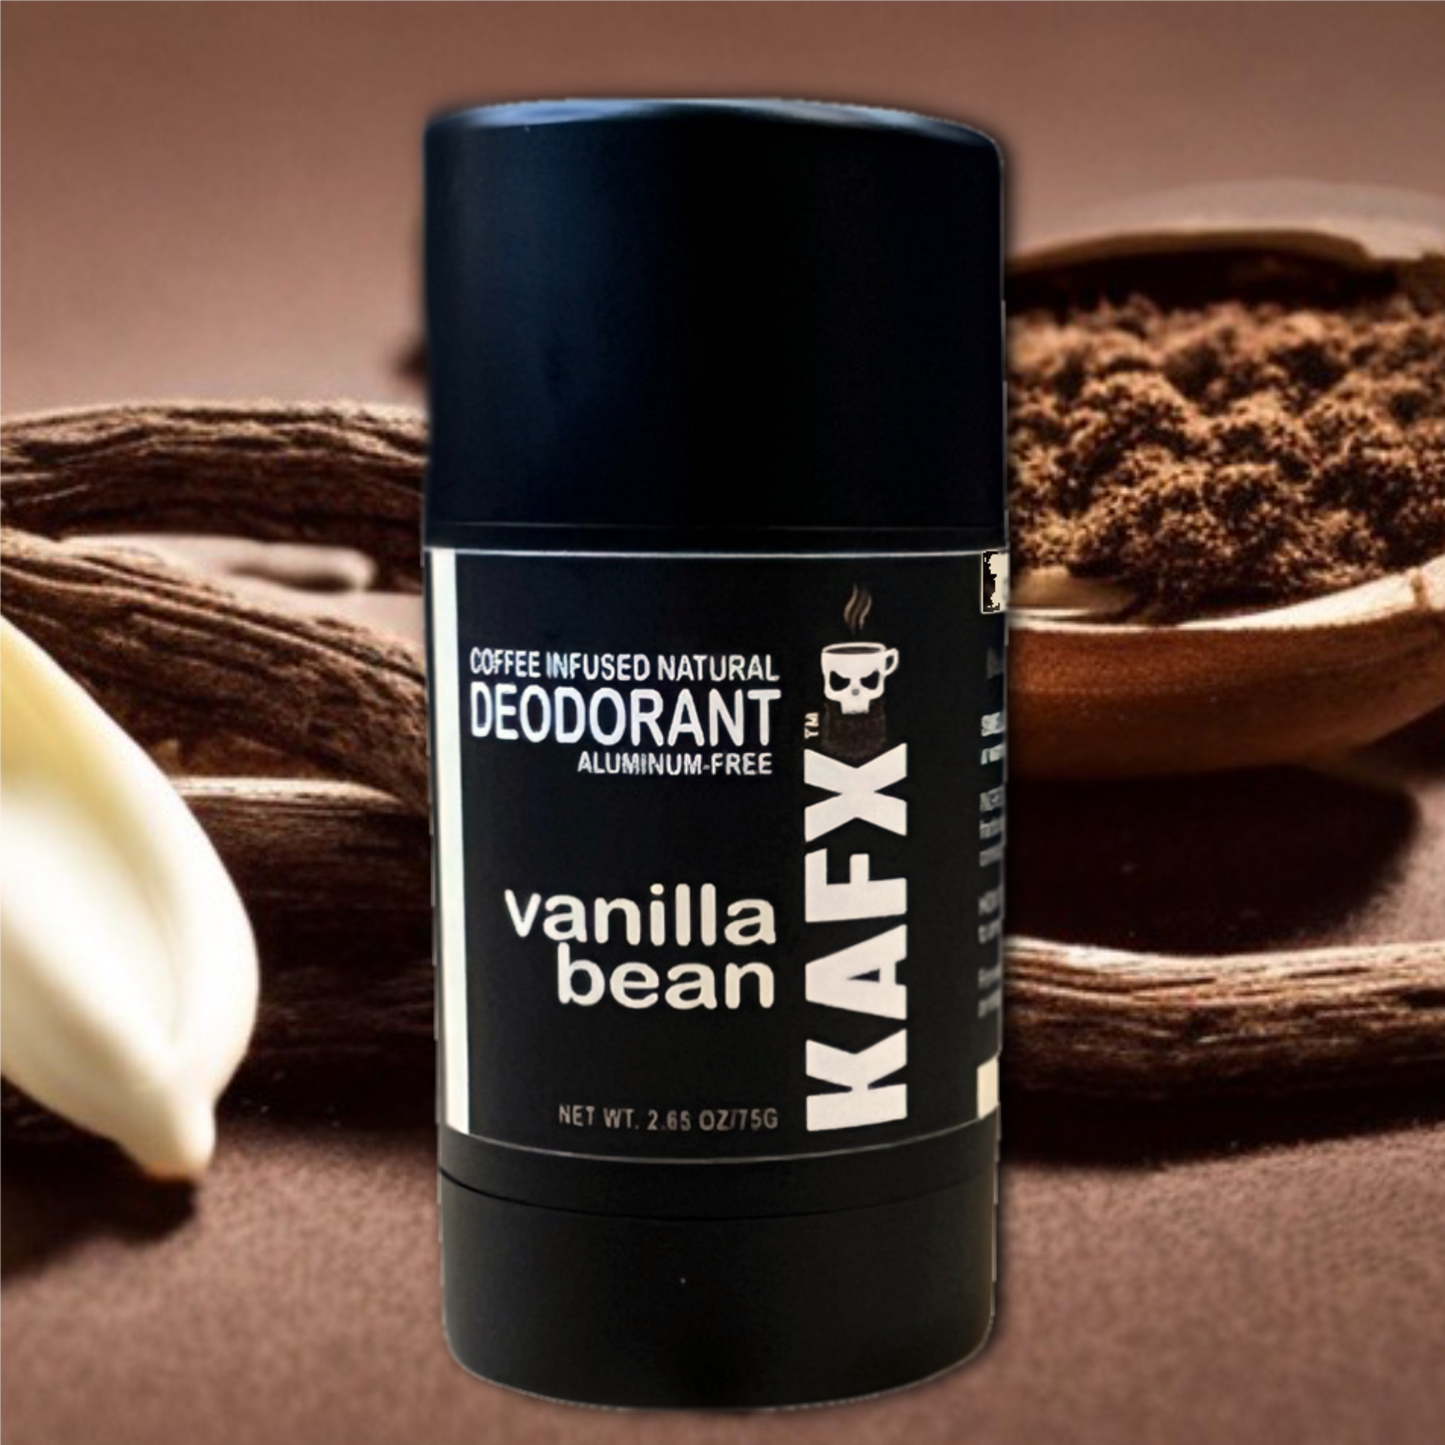 Vanilla Bean -  KAFX Body Natural Coffee Infused Deodorant